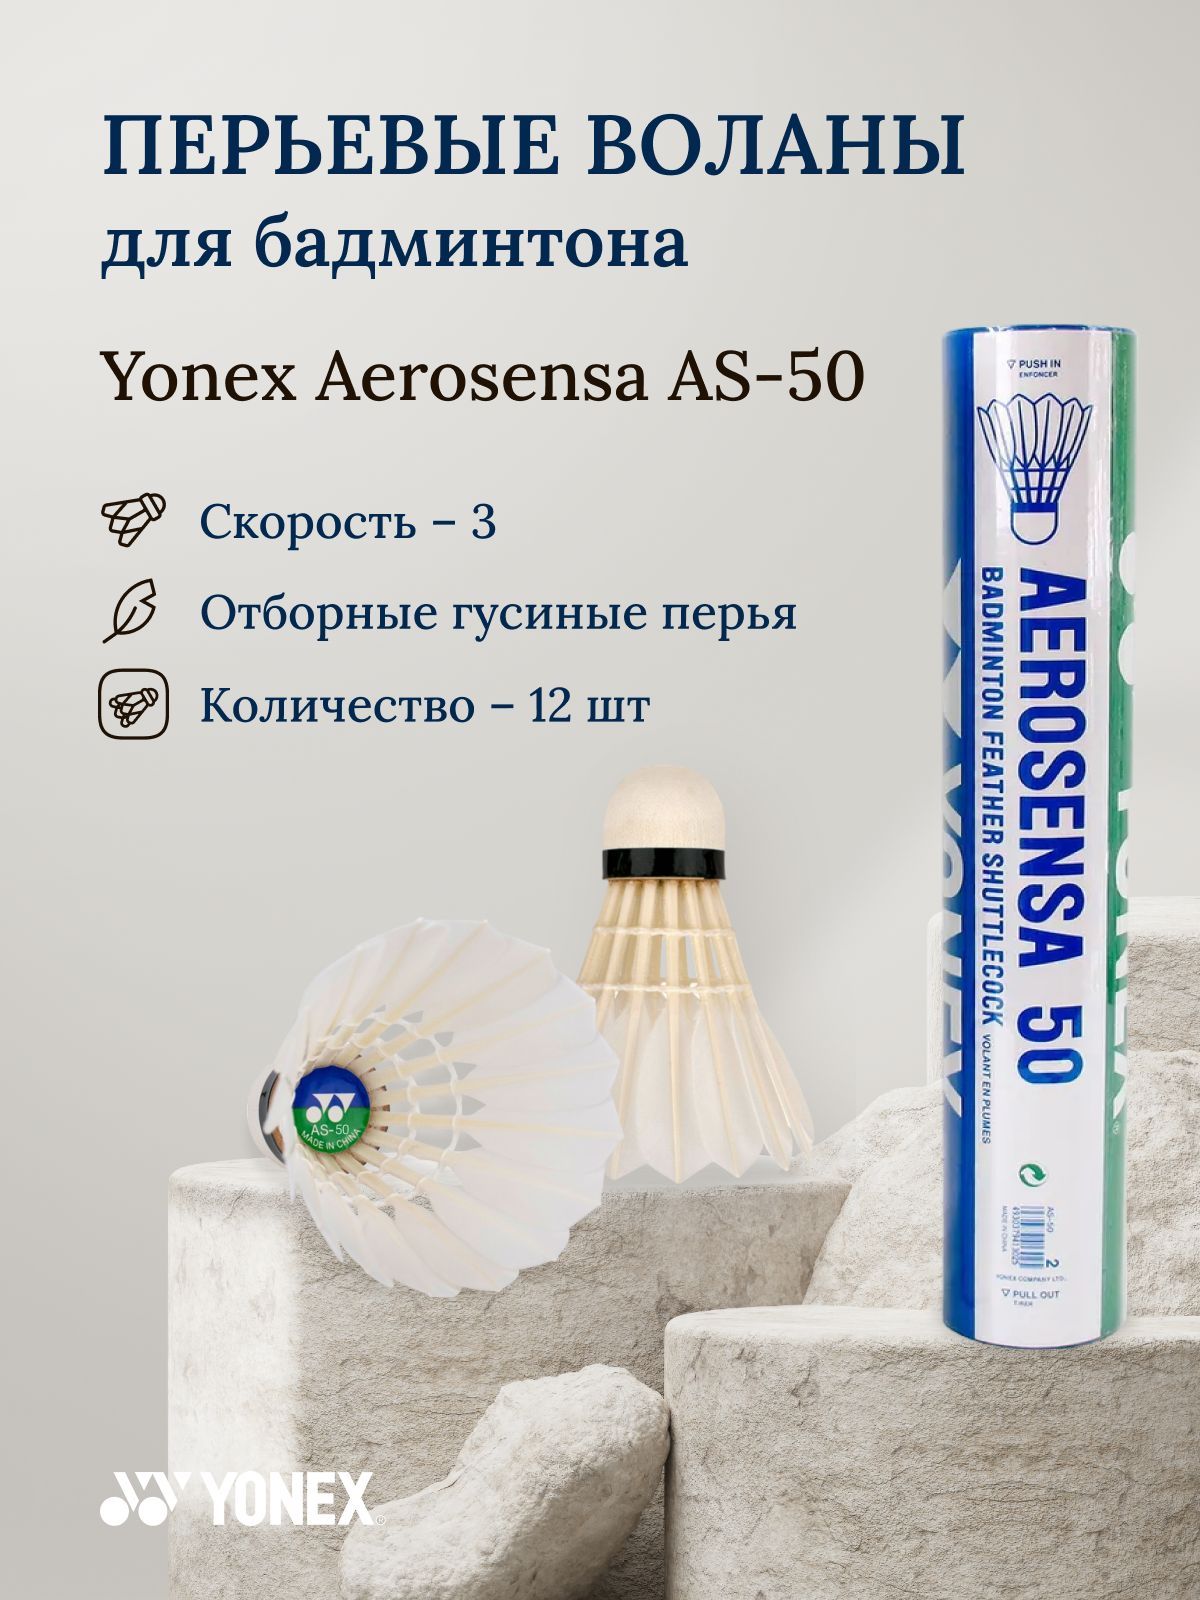 Воланы для бадминтона Yonex Aerosensa AS-50 (3 скорость)